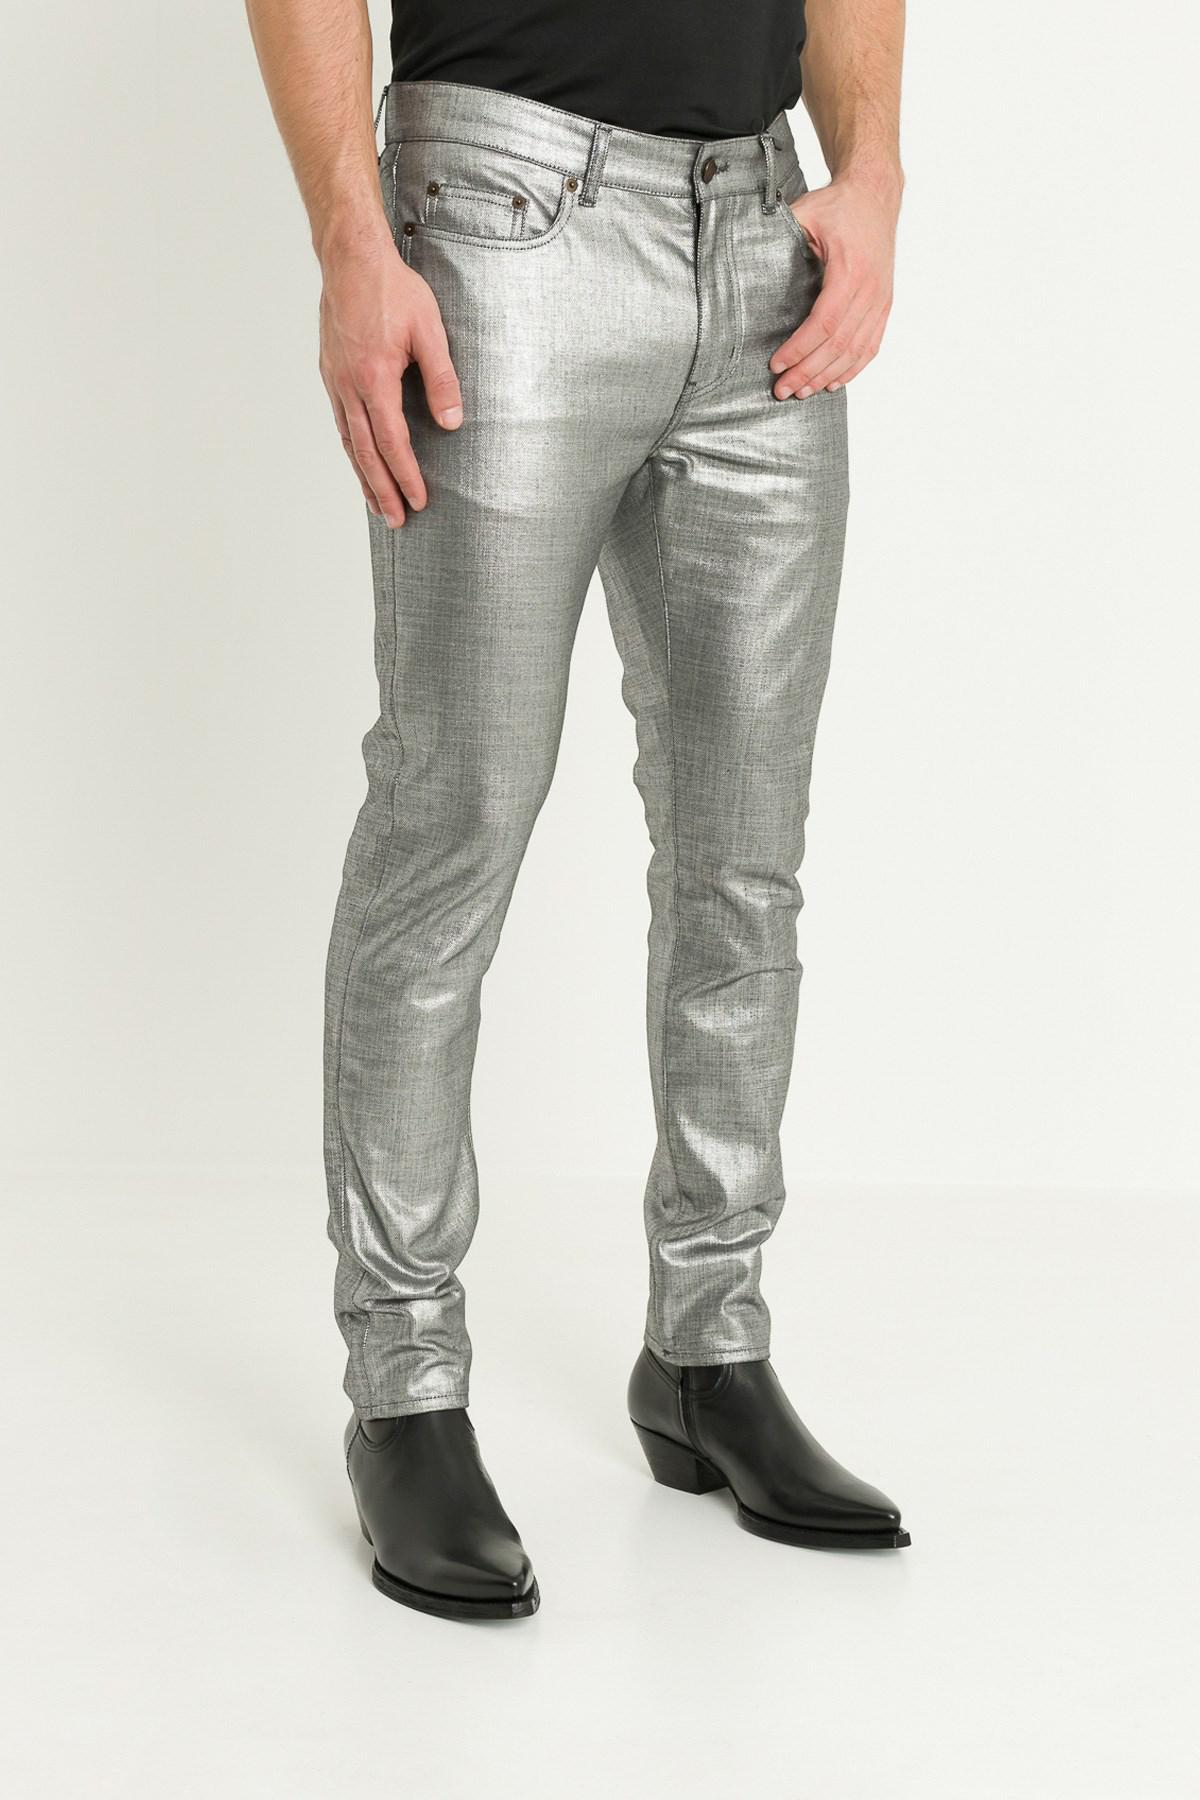 Saint Laurent Denim Laminated Silver Jeans in Gray for Men - Lyst